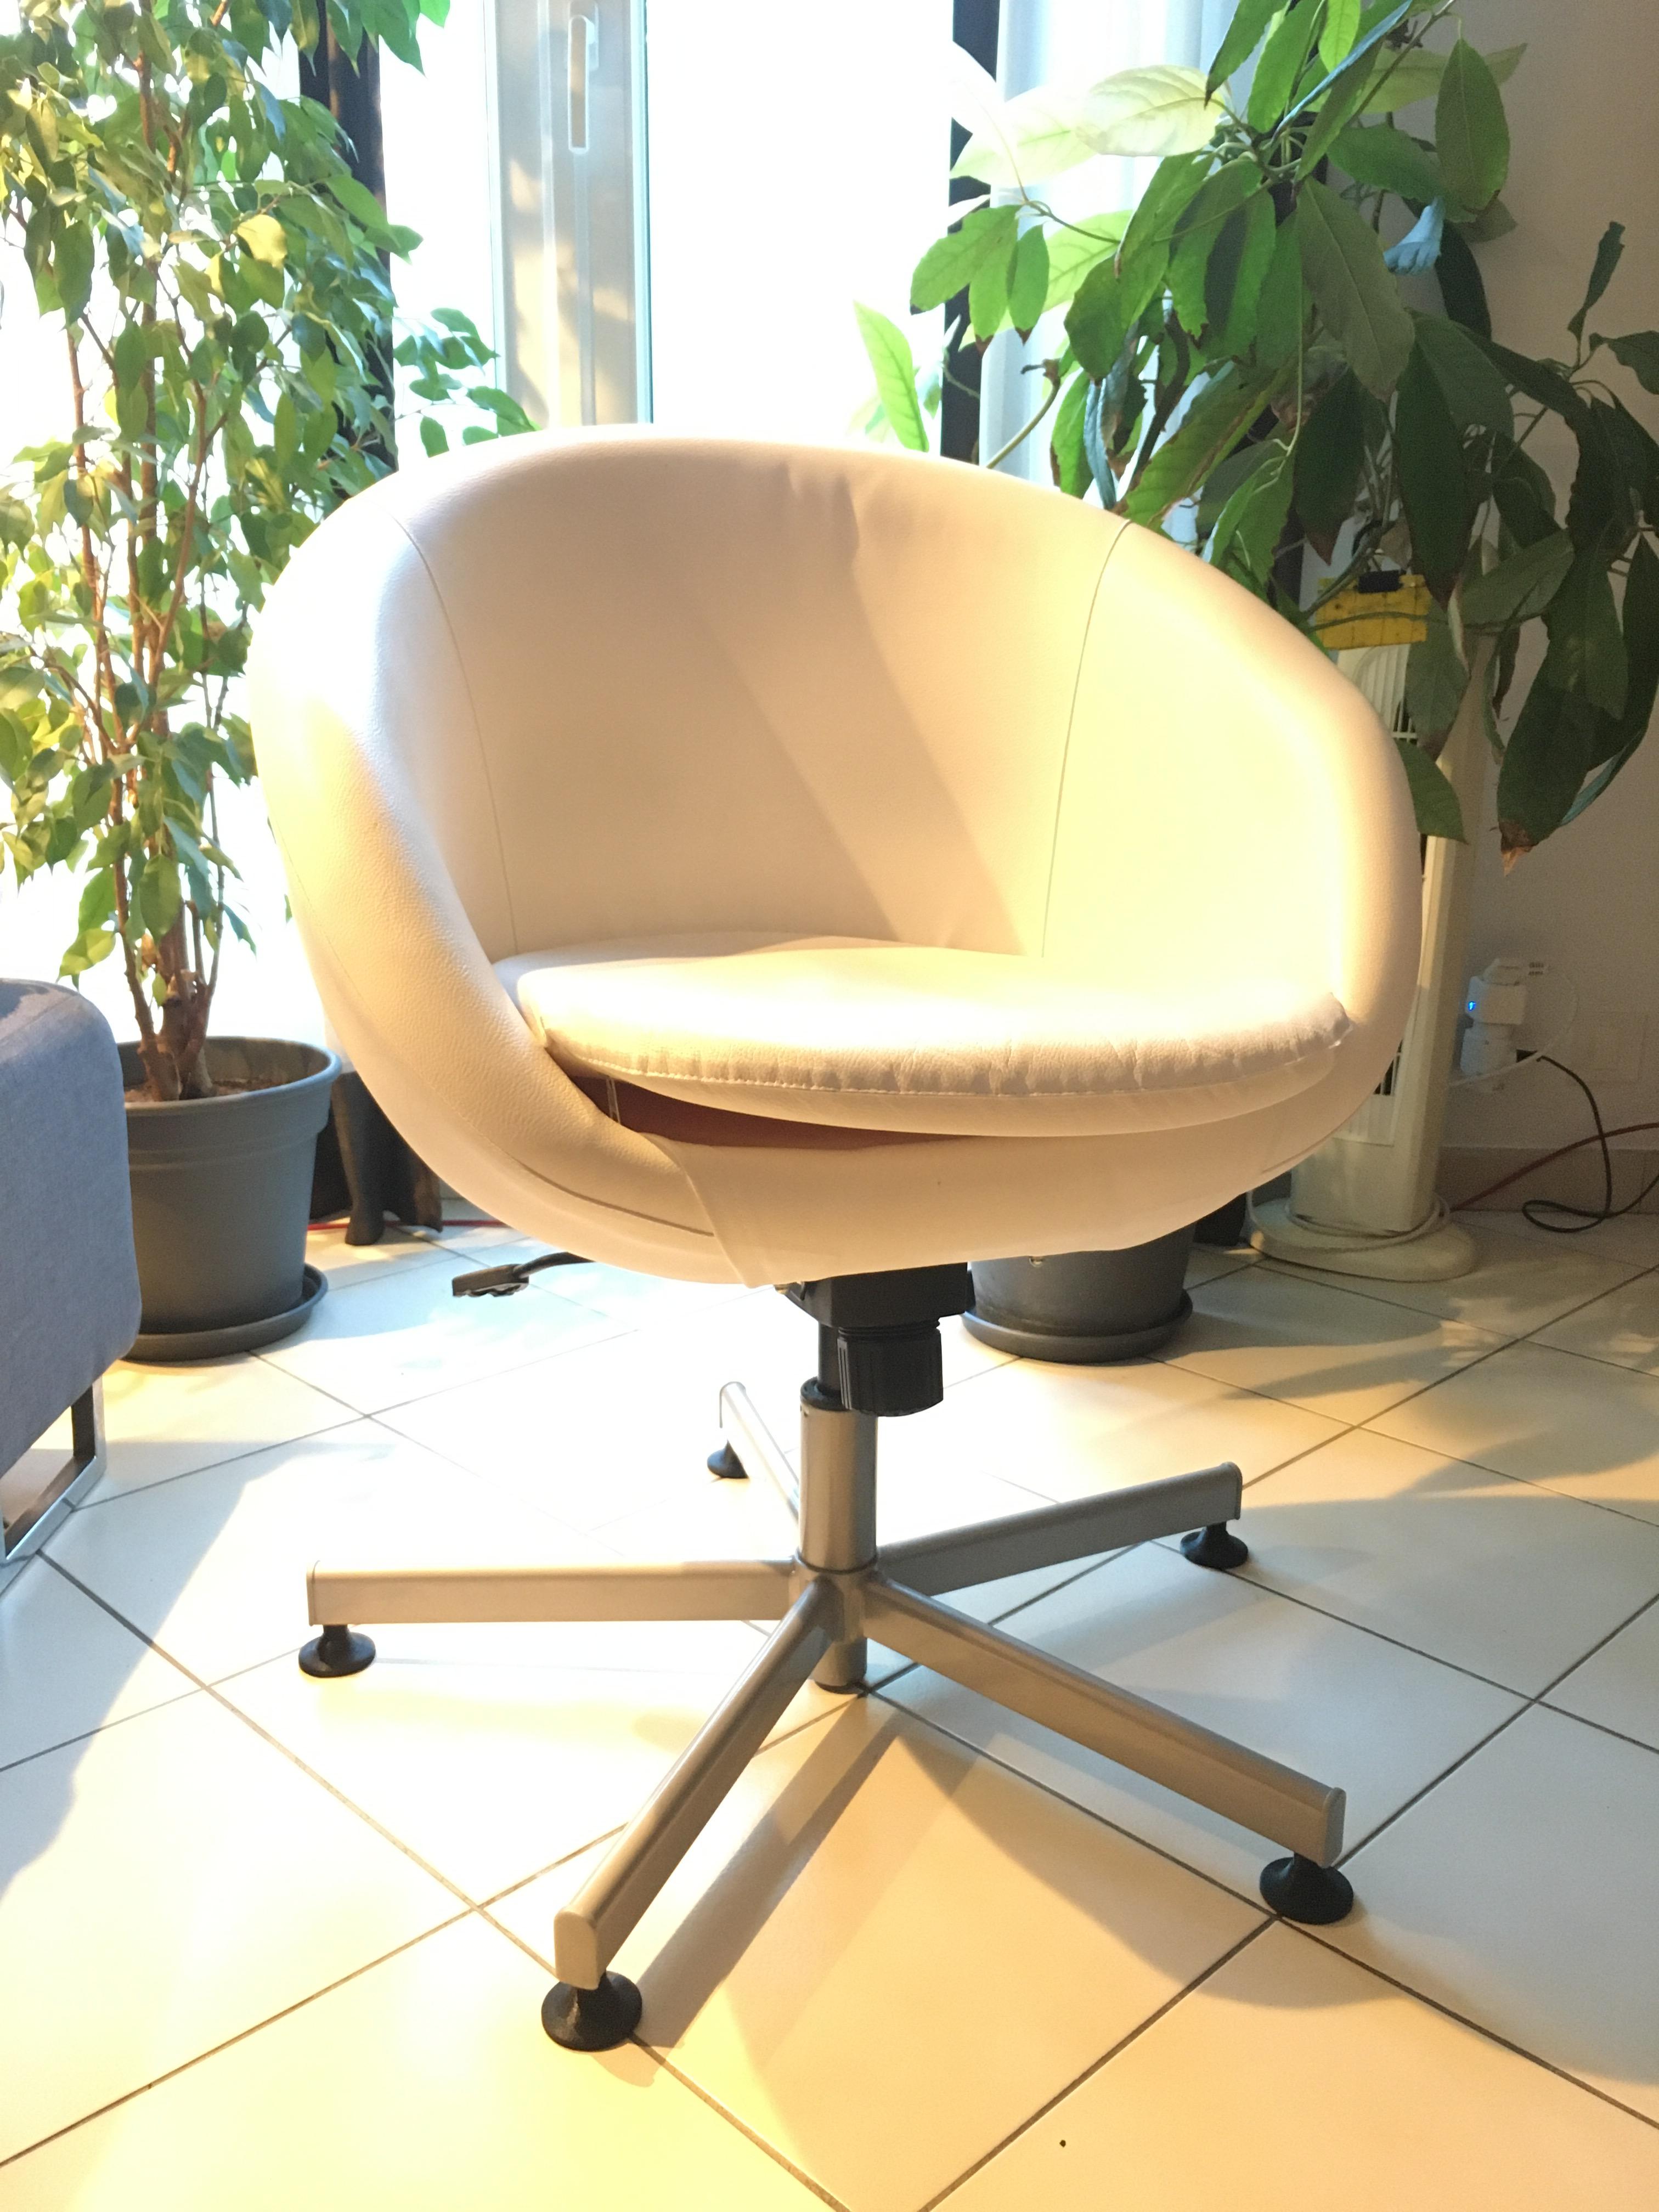 Pied fixe pour fauteuil de bureau IKEA -- fixed leg for IKEA office chair 3d model